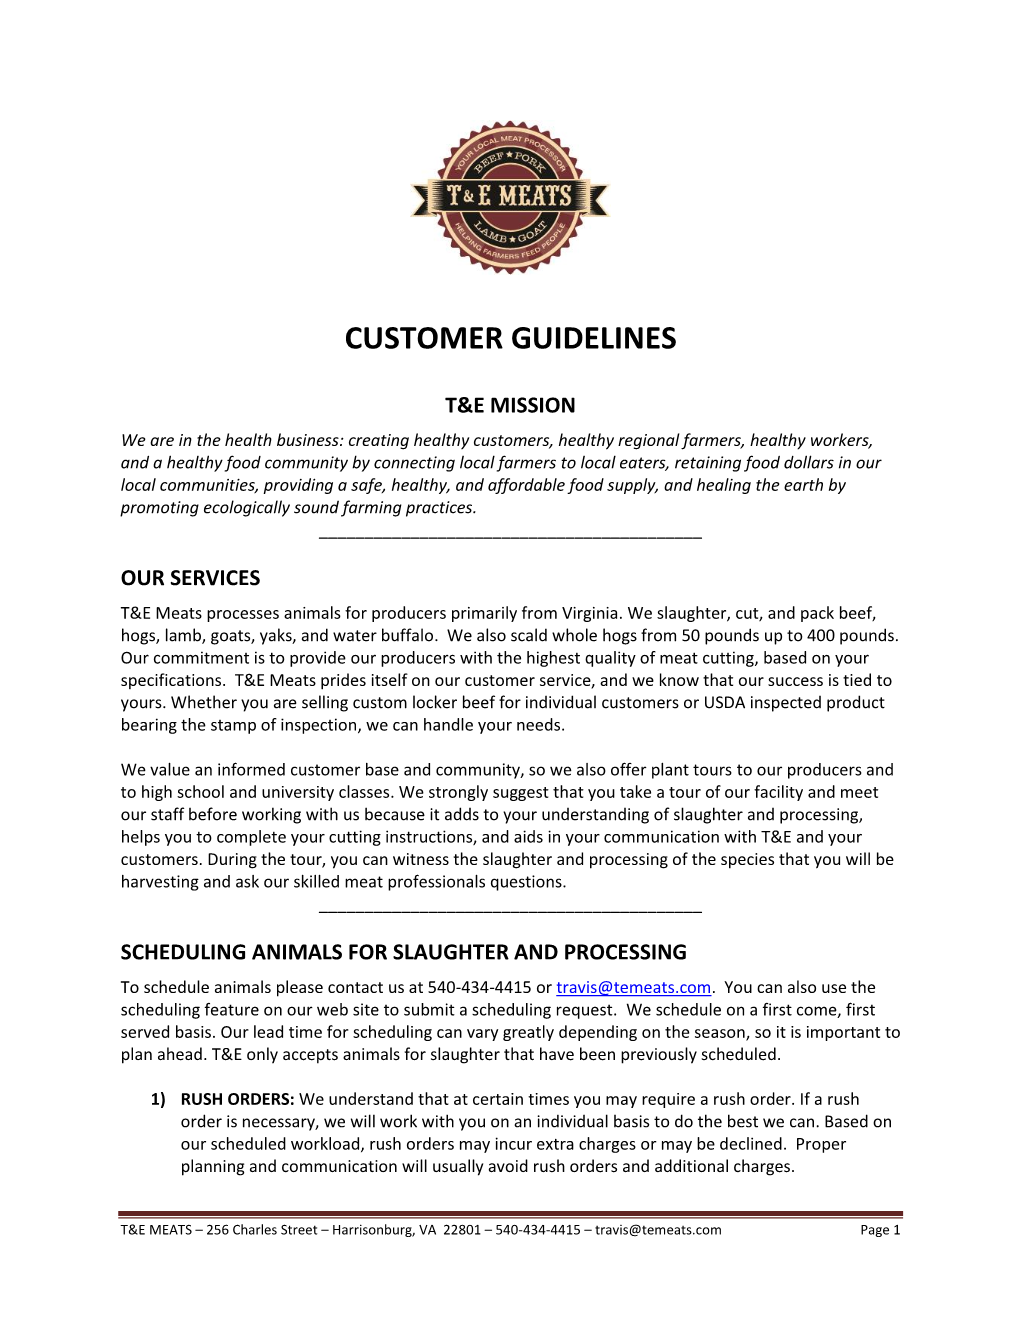 Customer Guidelines